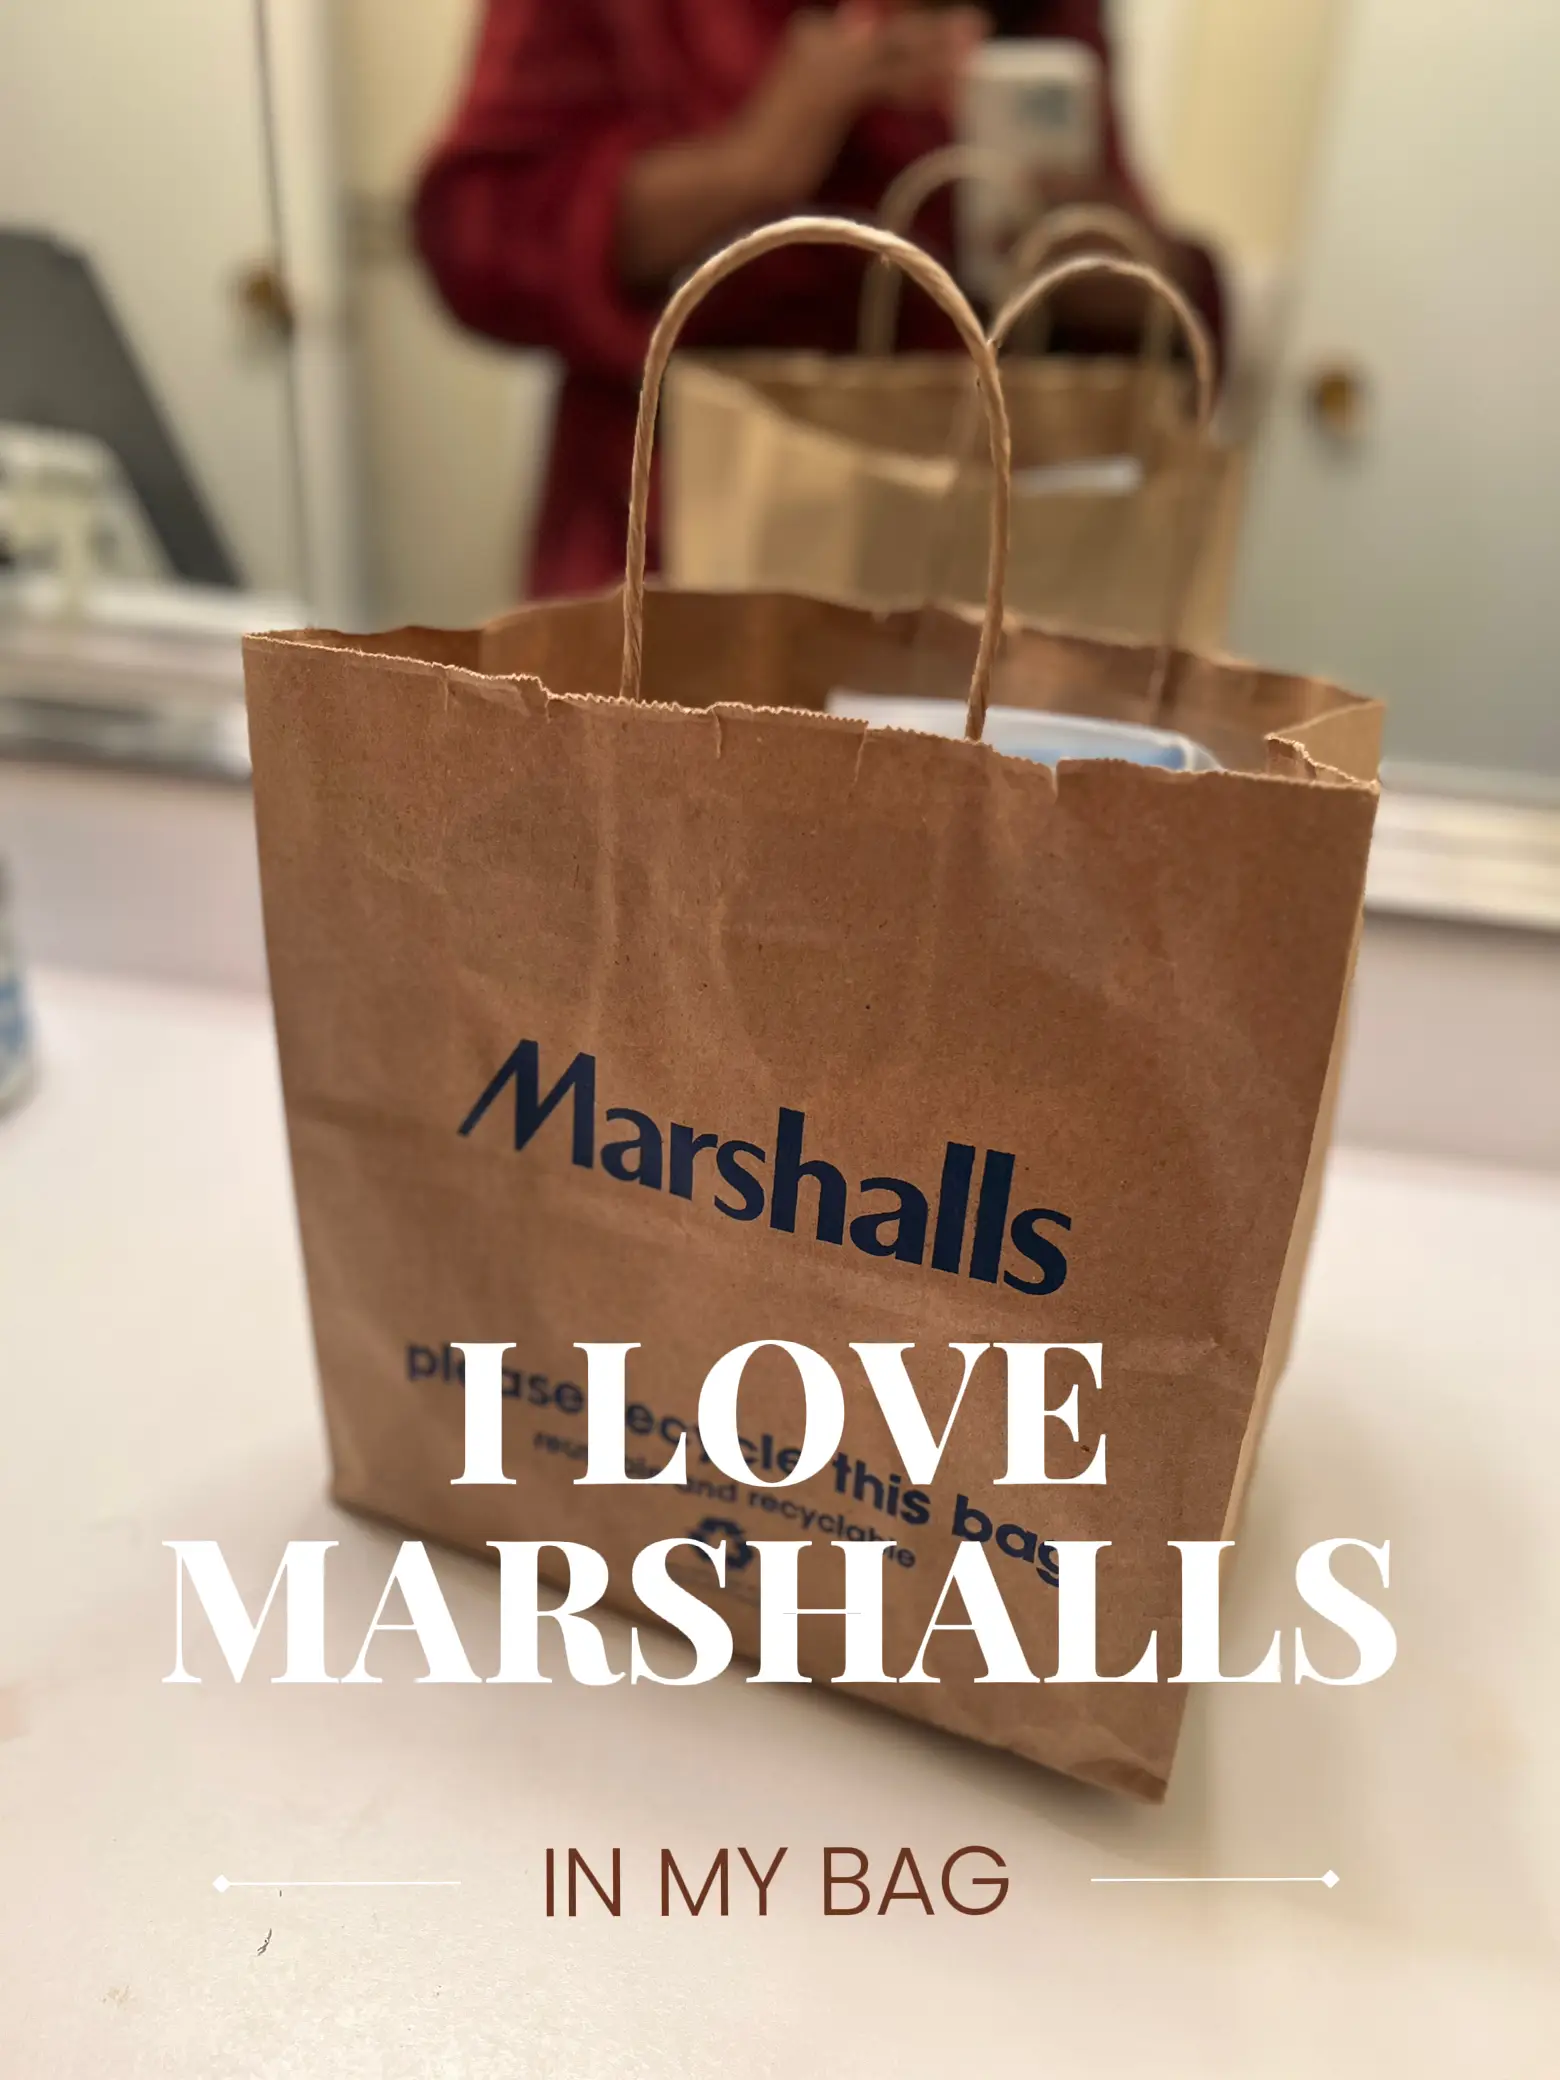 Marshalls Finds, Steve Madden bags, skincare etc.